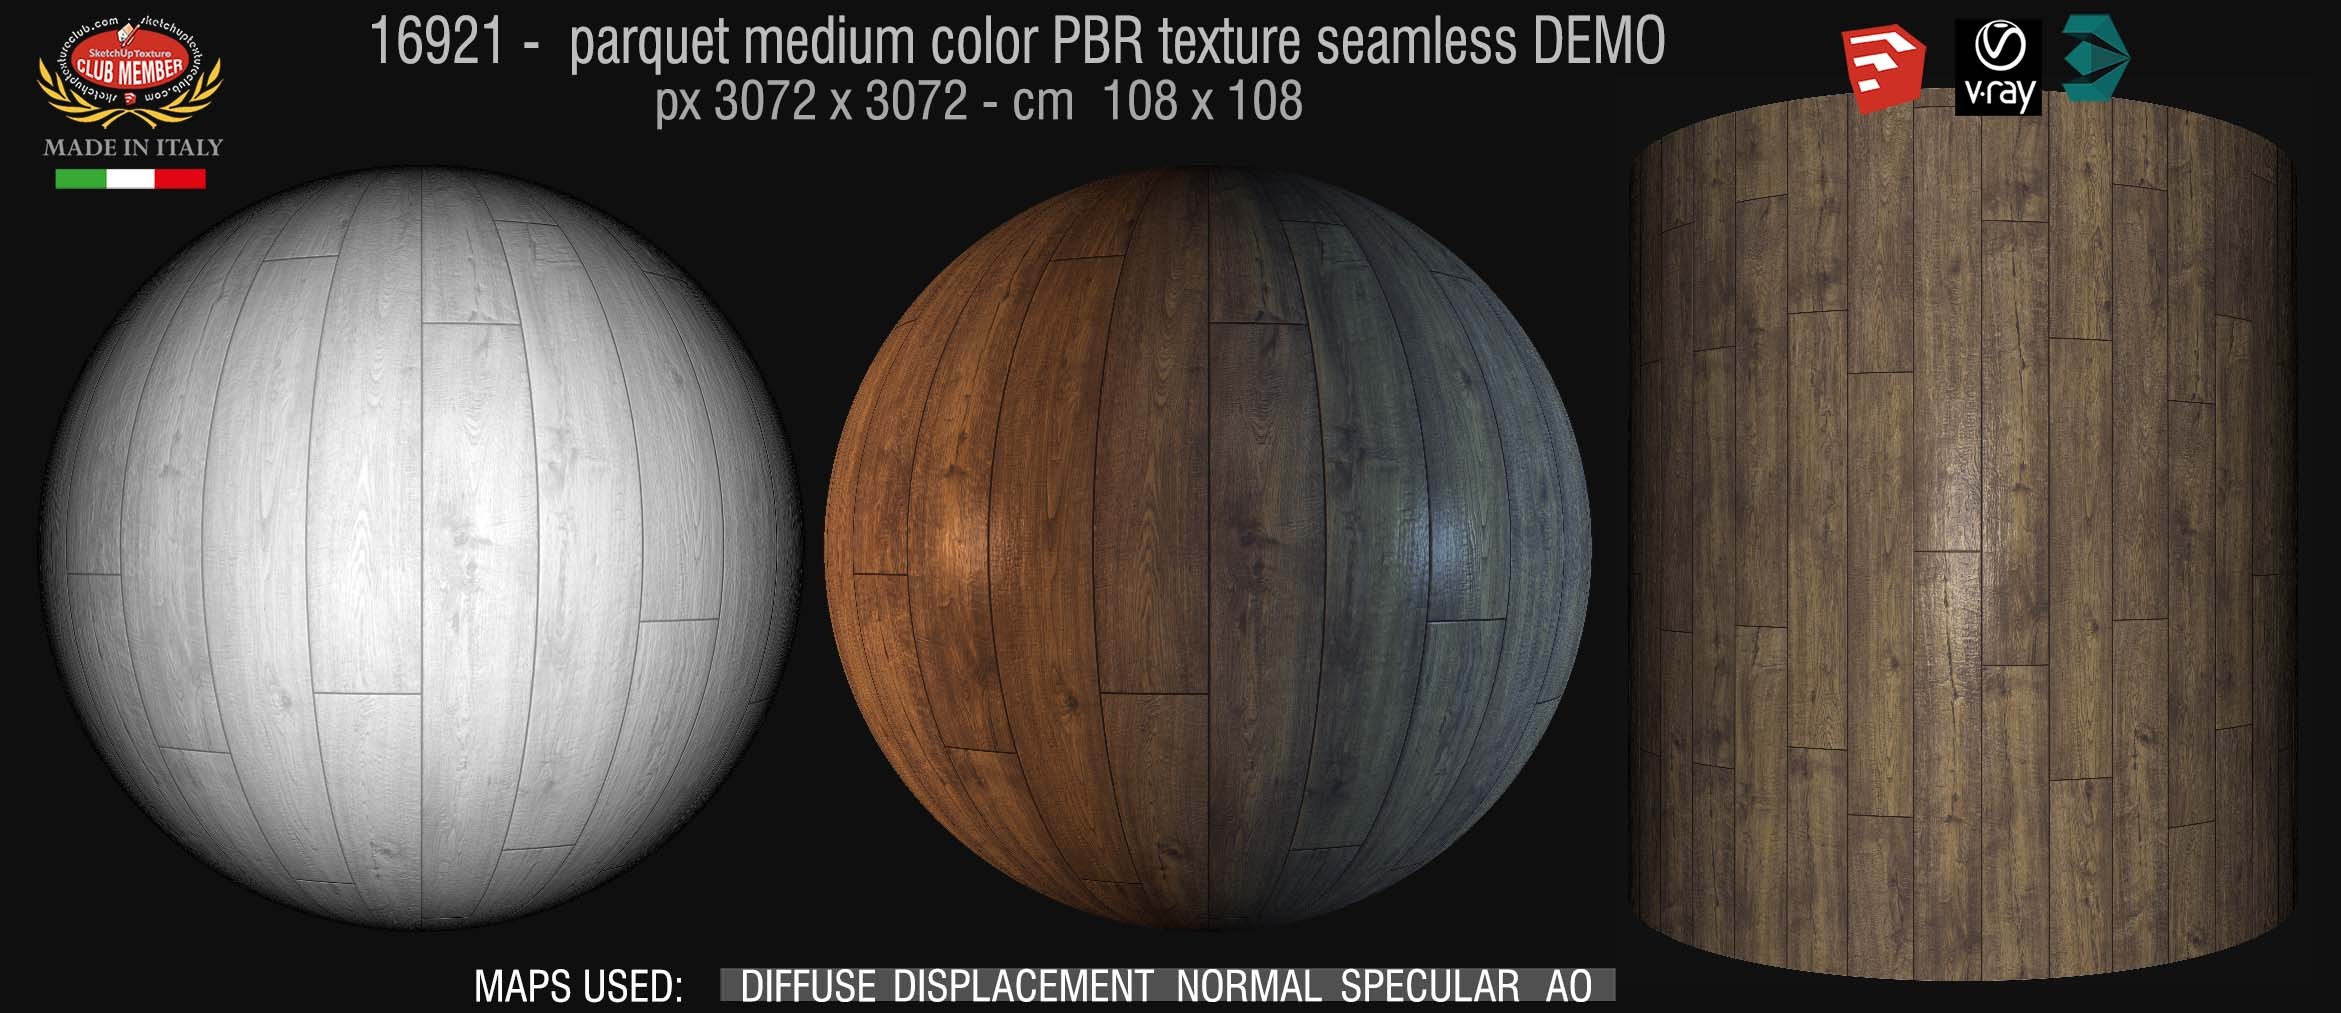 16921 parquet medium color PBR texture seamless DEMO